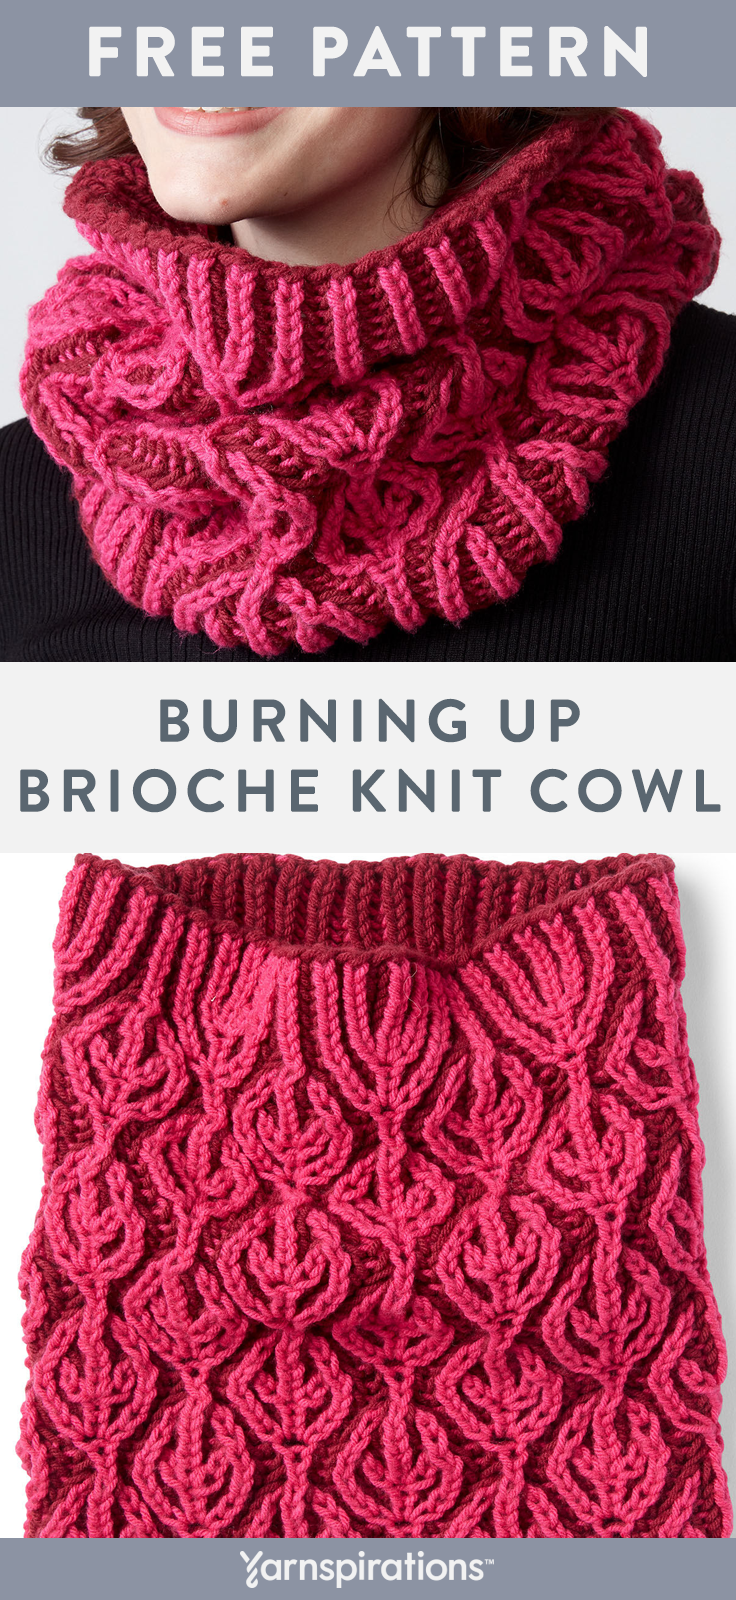 Caron Burning Up Crioche Knit Cowl Burning Caron Cowl Crioche Knit In 2020 Brioche Knitting Patterns Colorwork Knitting Colorwork Knitting Patterns